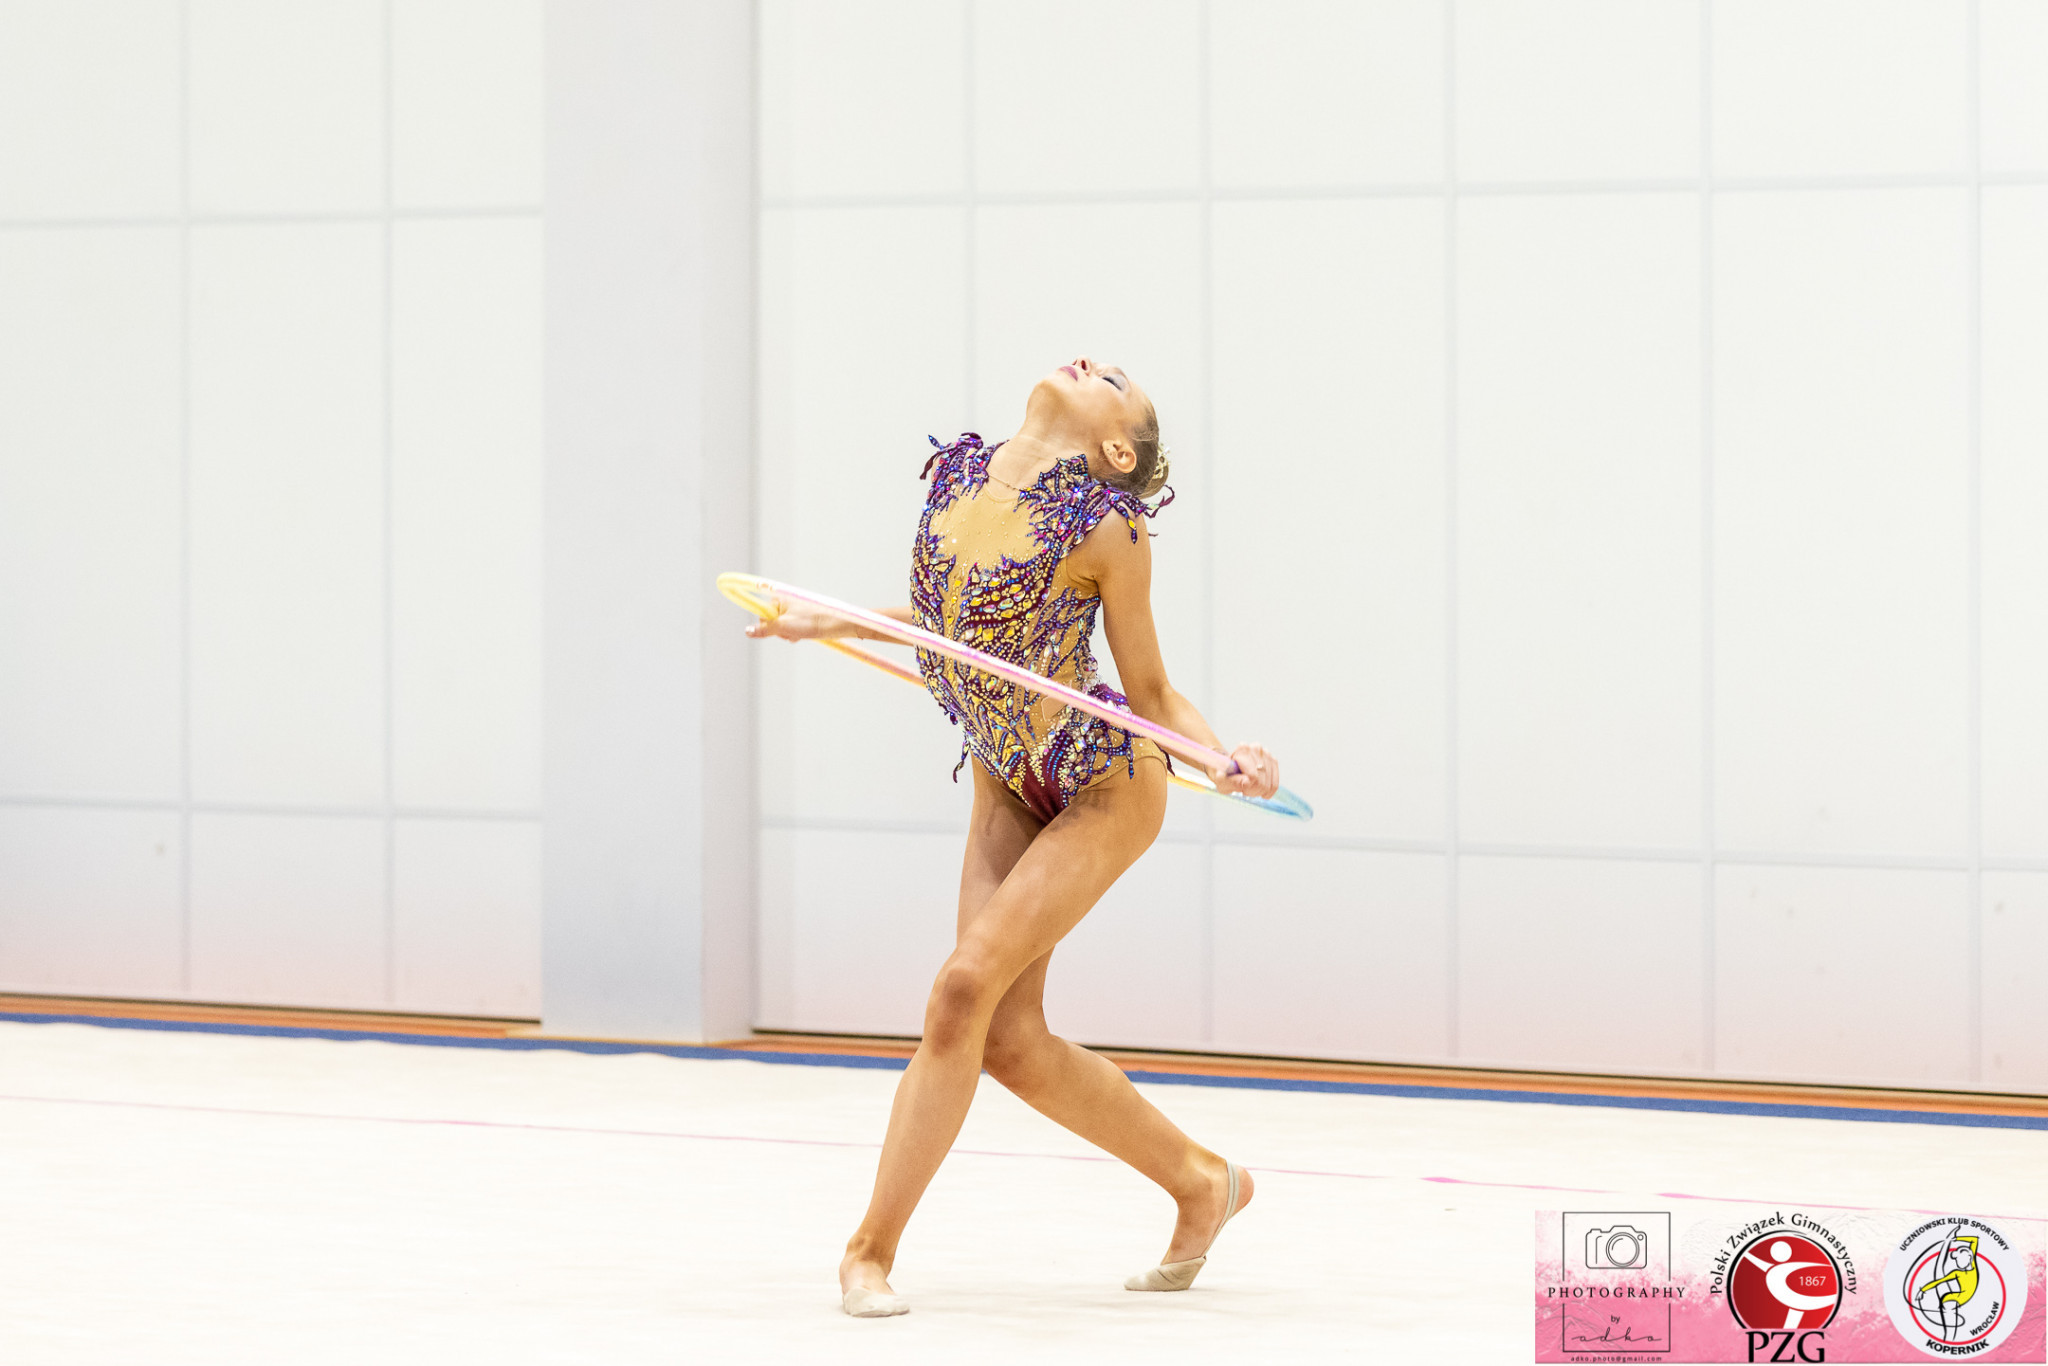 Liliana Lewińska is a rising star among Polish gymnastics after winning numerous events in the last two years ©PGA / Adrian Kopaczko 